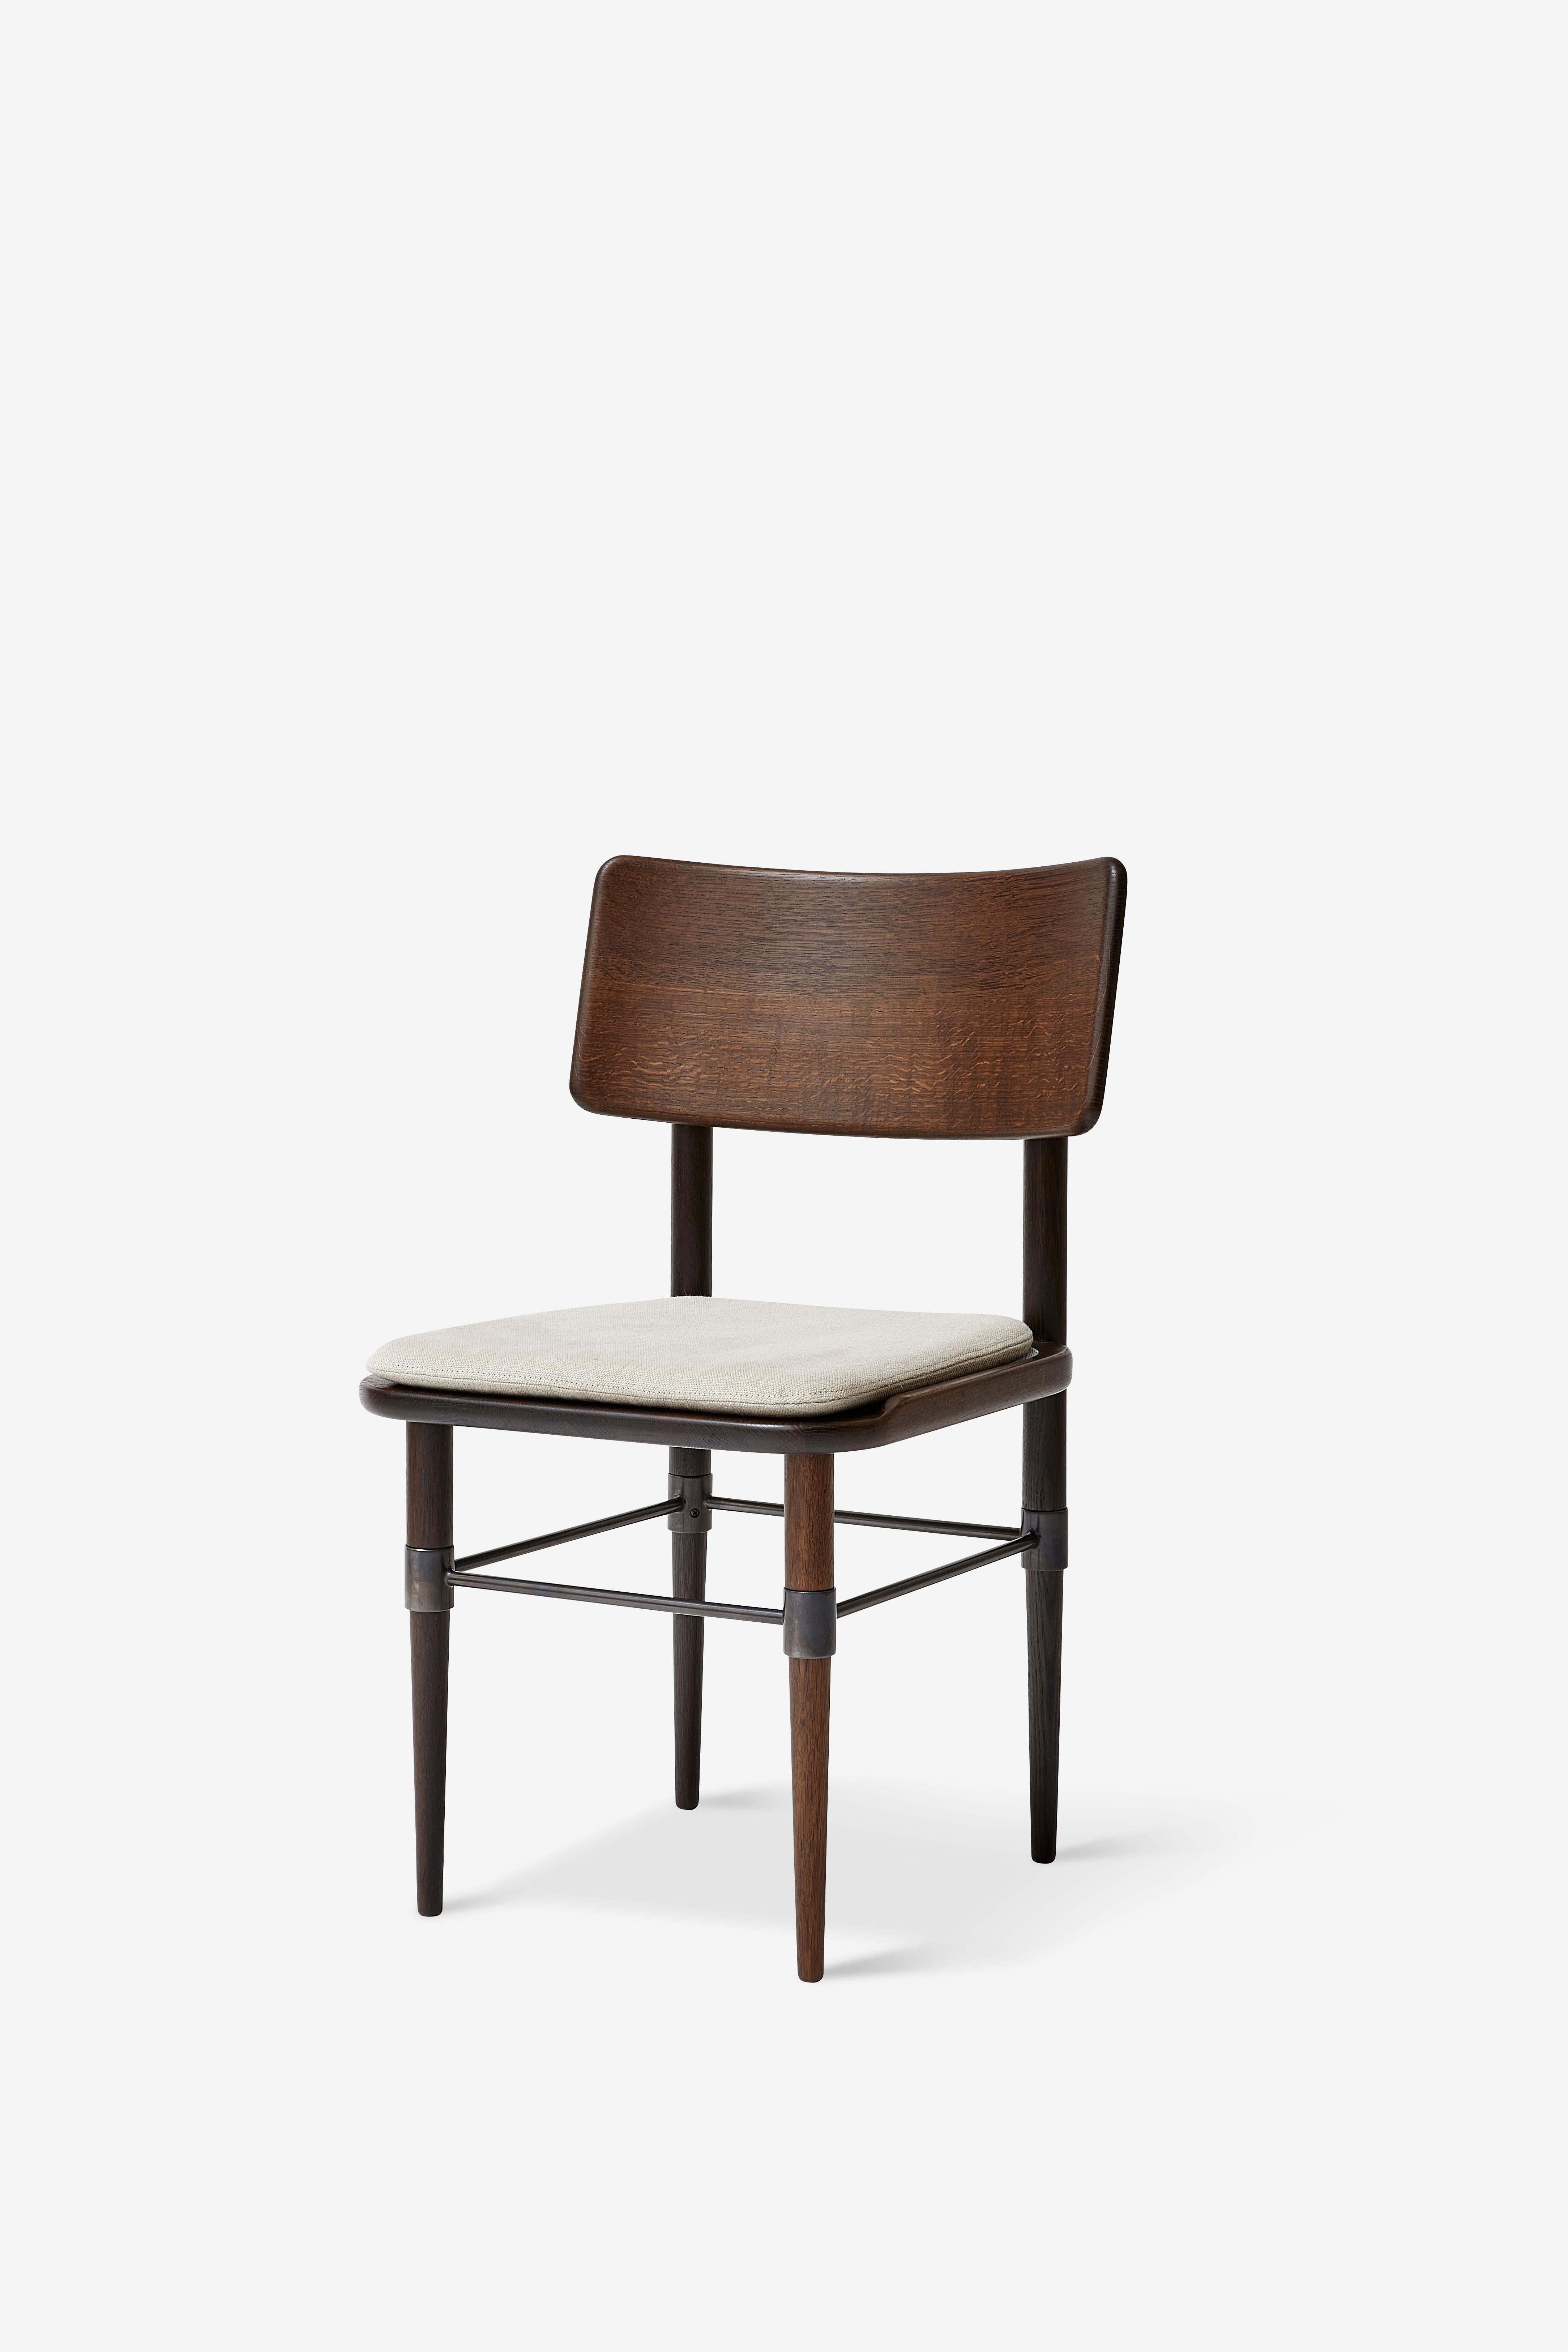 MG101 Dining chair in smoked oak by Malte Gormsen Design by Space Copenhagen For Sale 2